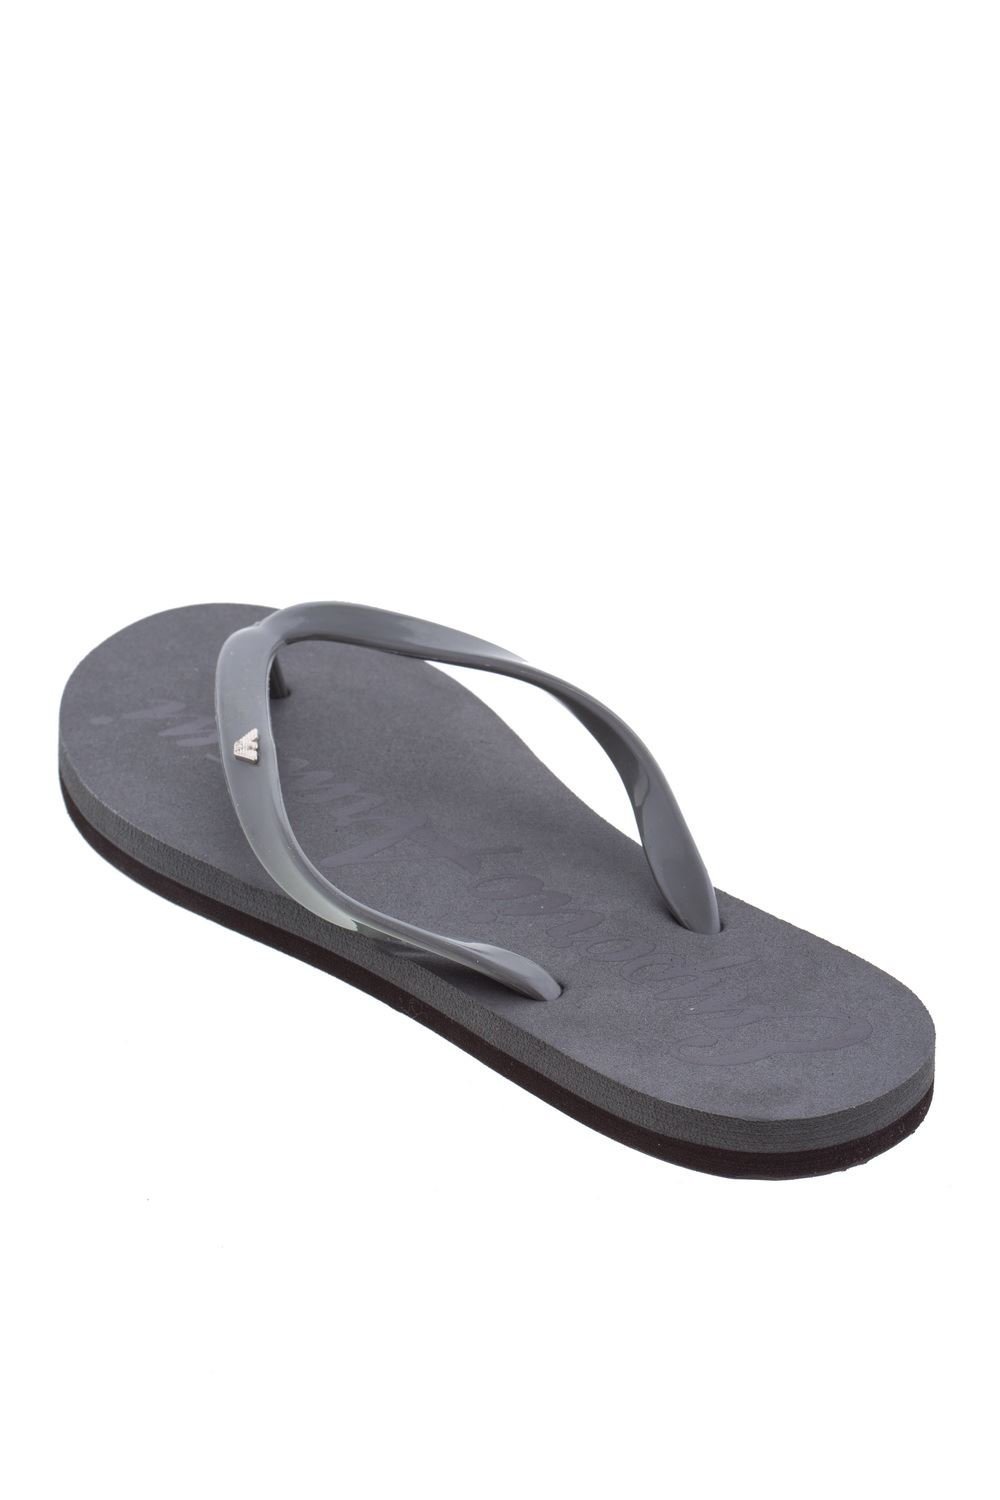 EMPORIO ARMANI Women Grey Flat Thong Rubber Sandals Flip Flops Summer ...